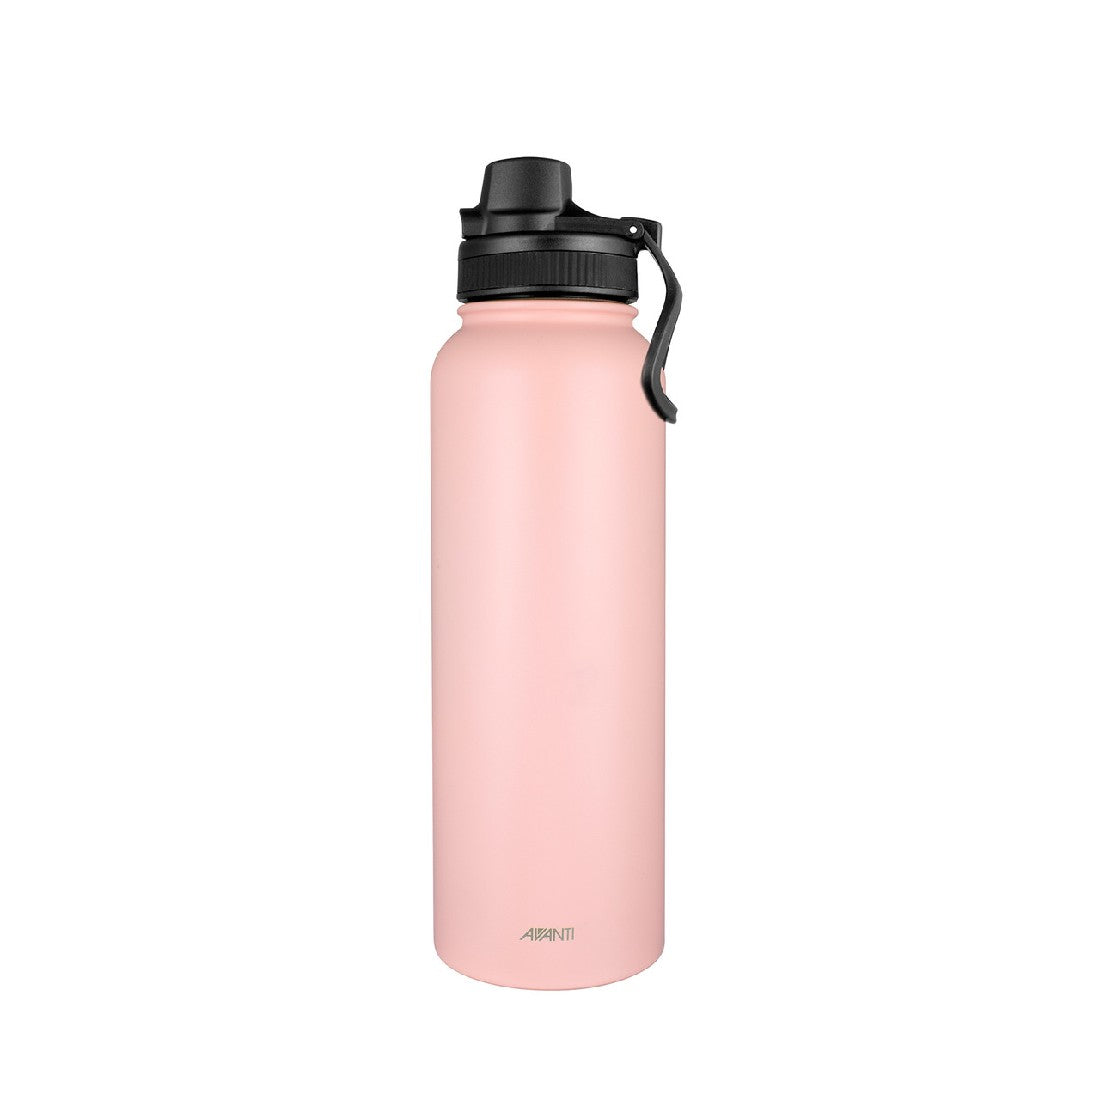 Avanti Hydrosport Quench Bottle 1.1l - Pink